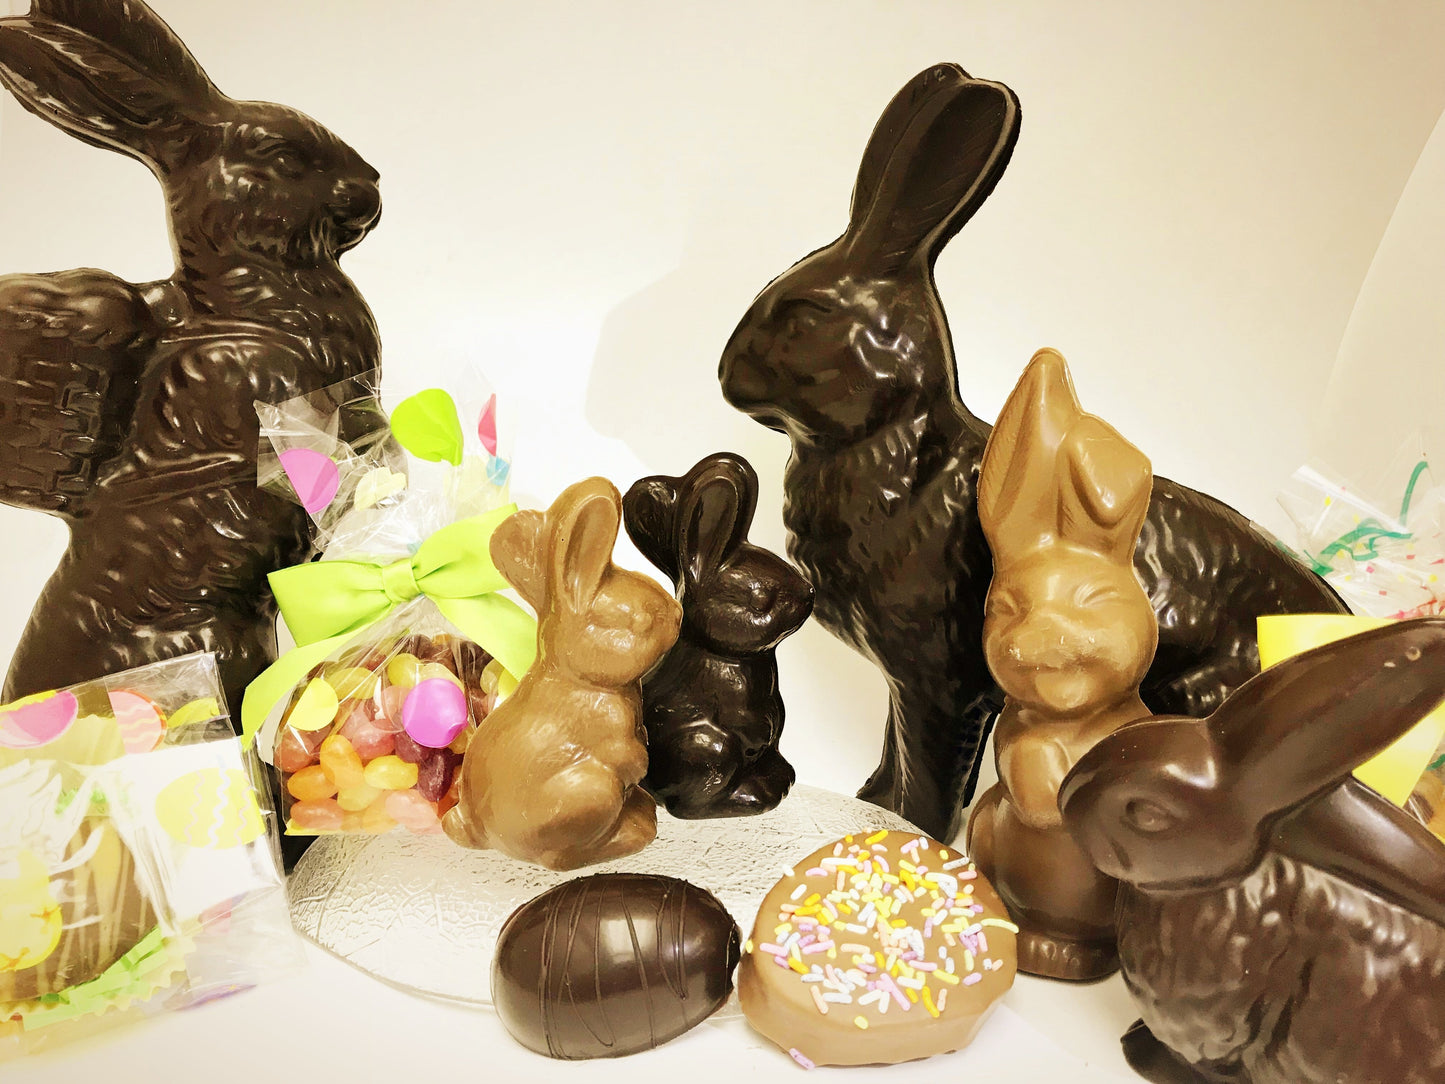 Chocolate Easter Bunnies